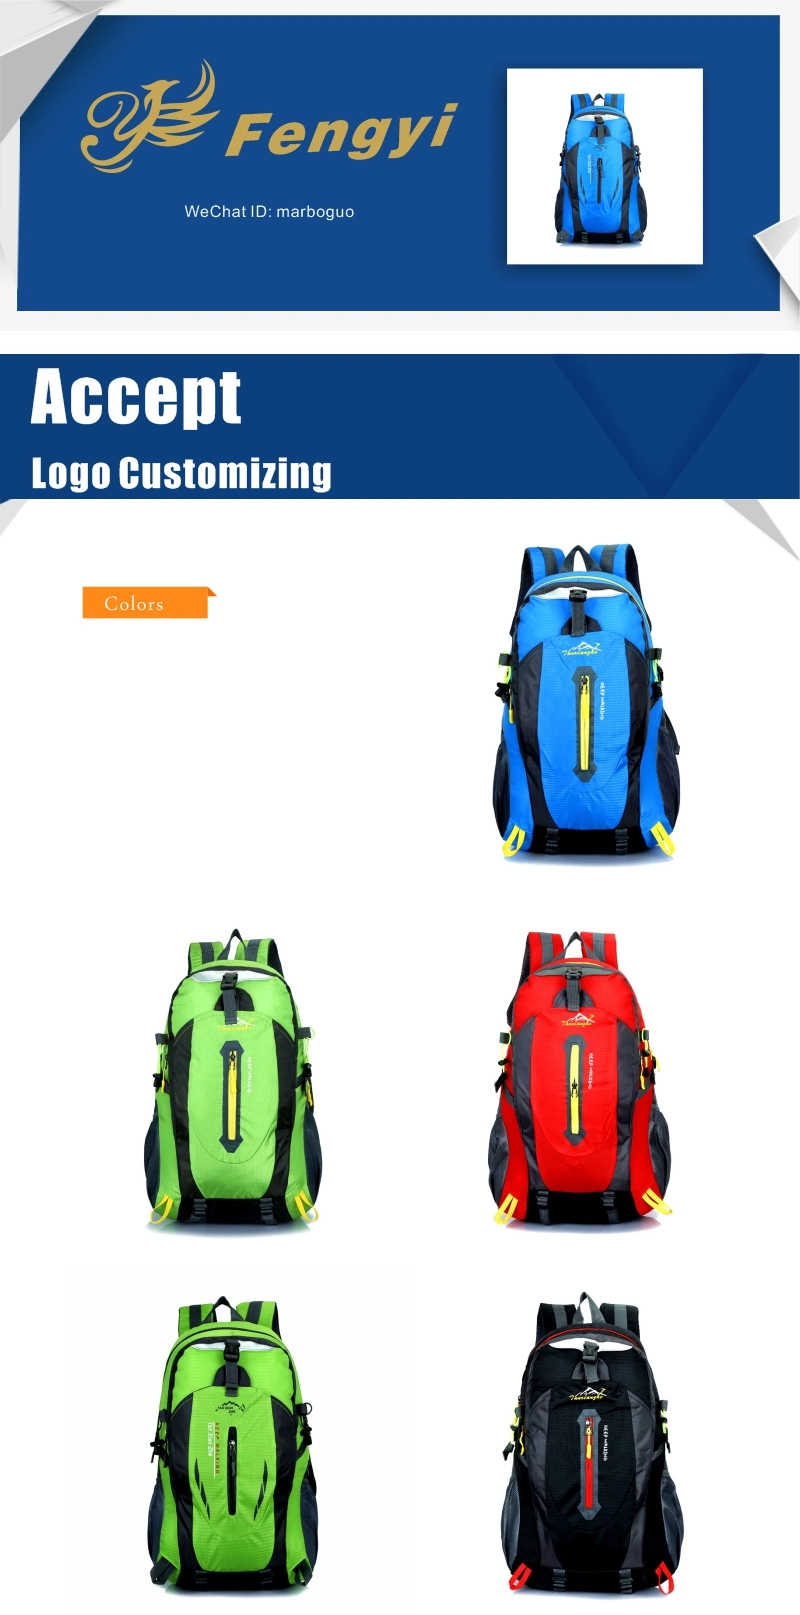 Amazon Best Seller New Arrivals Hot Selling Large Capacity Outdoor Hiking Bag Men's Super Light Backpack